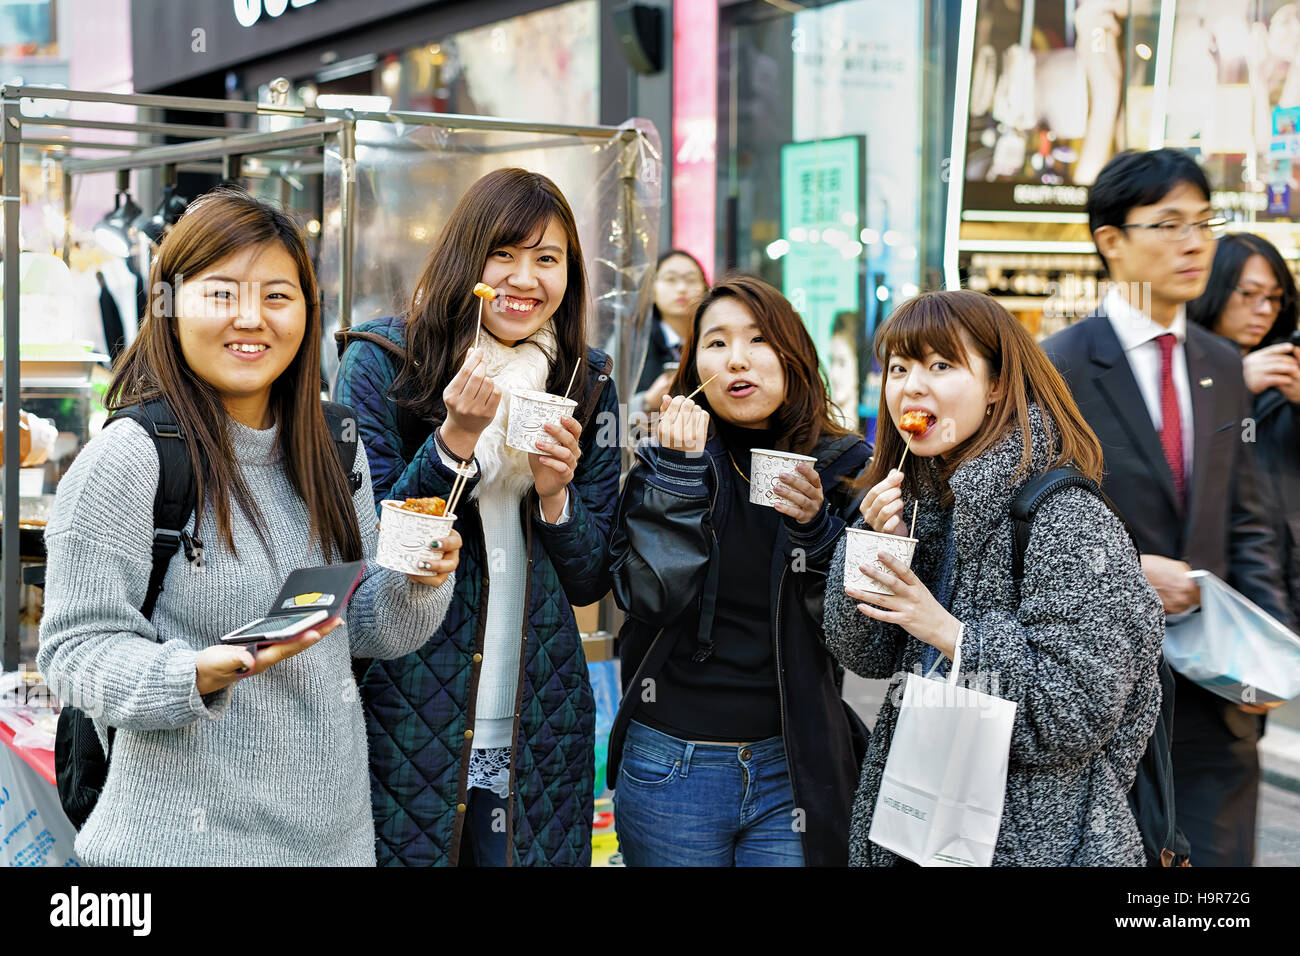 seoul-south-korea-march-14-2016-korean-girls-tasting-street-food-at-H9R72G.jpg